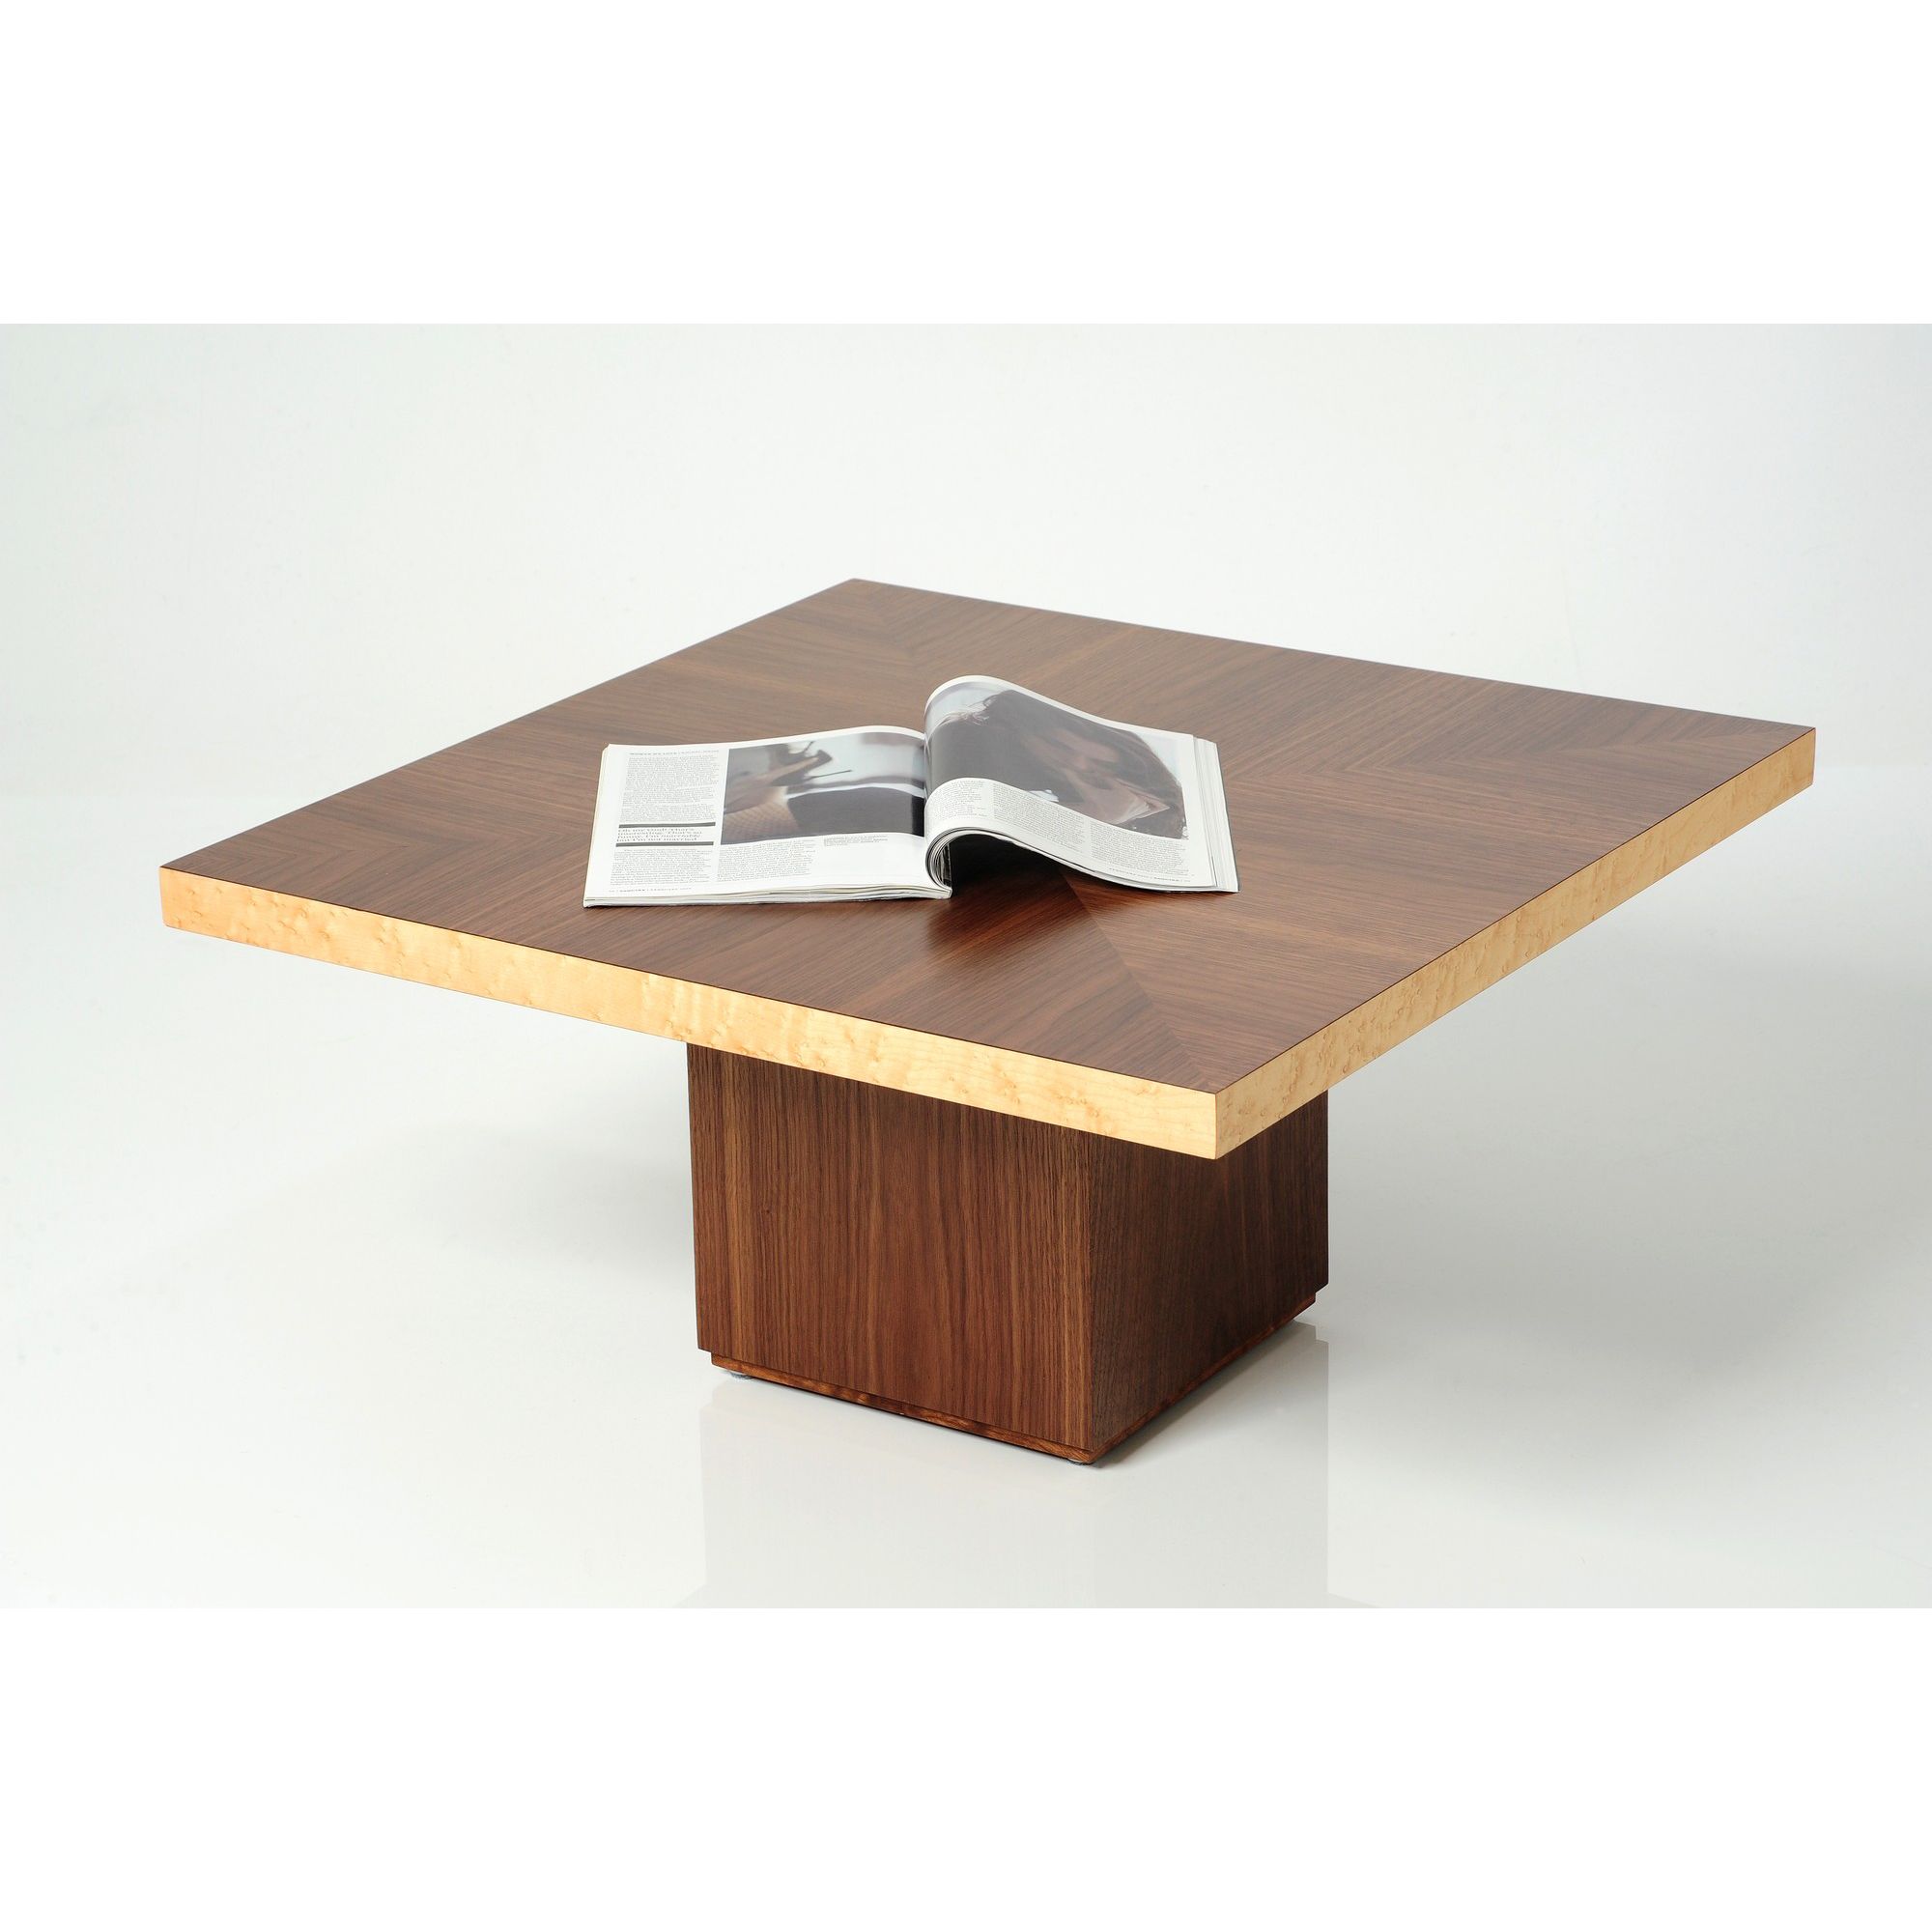 Trefurn Tablet Coffee Table - Fumed Oak and Birds Eye Maple at Tesco Direct